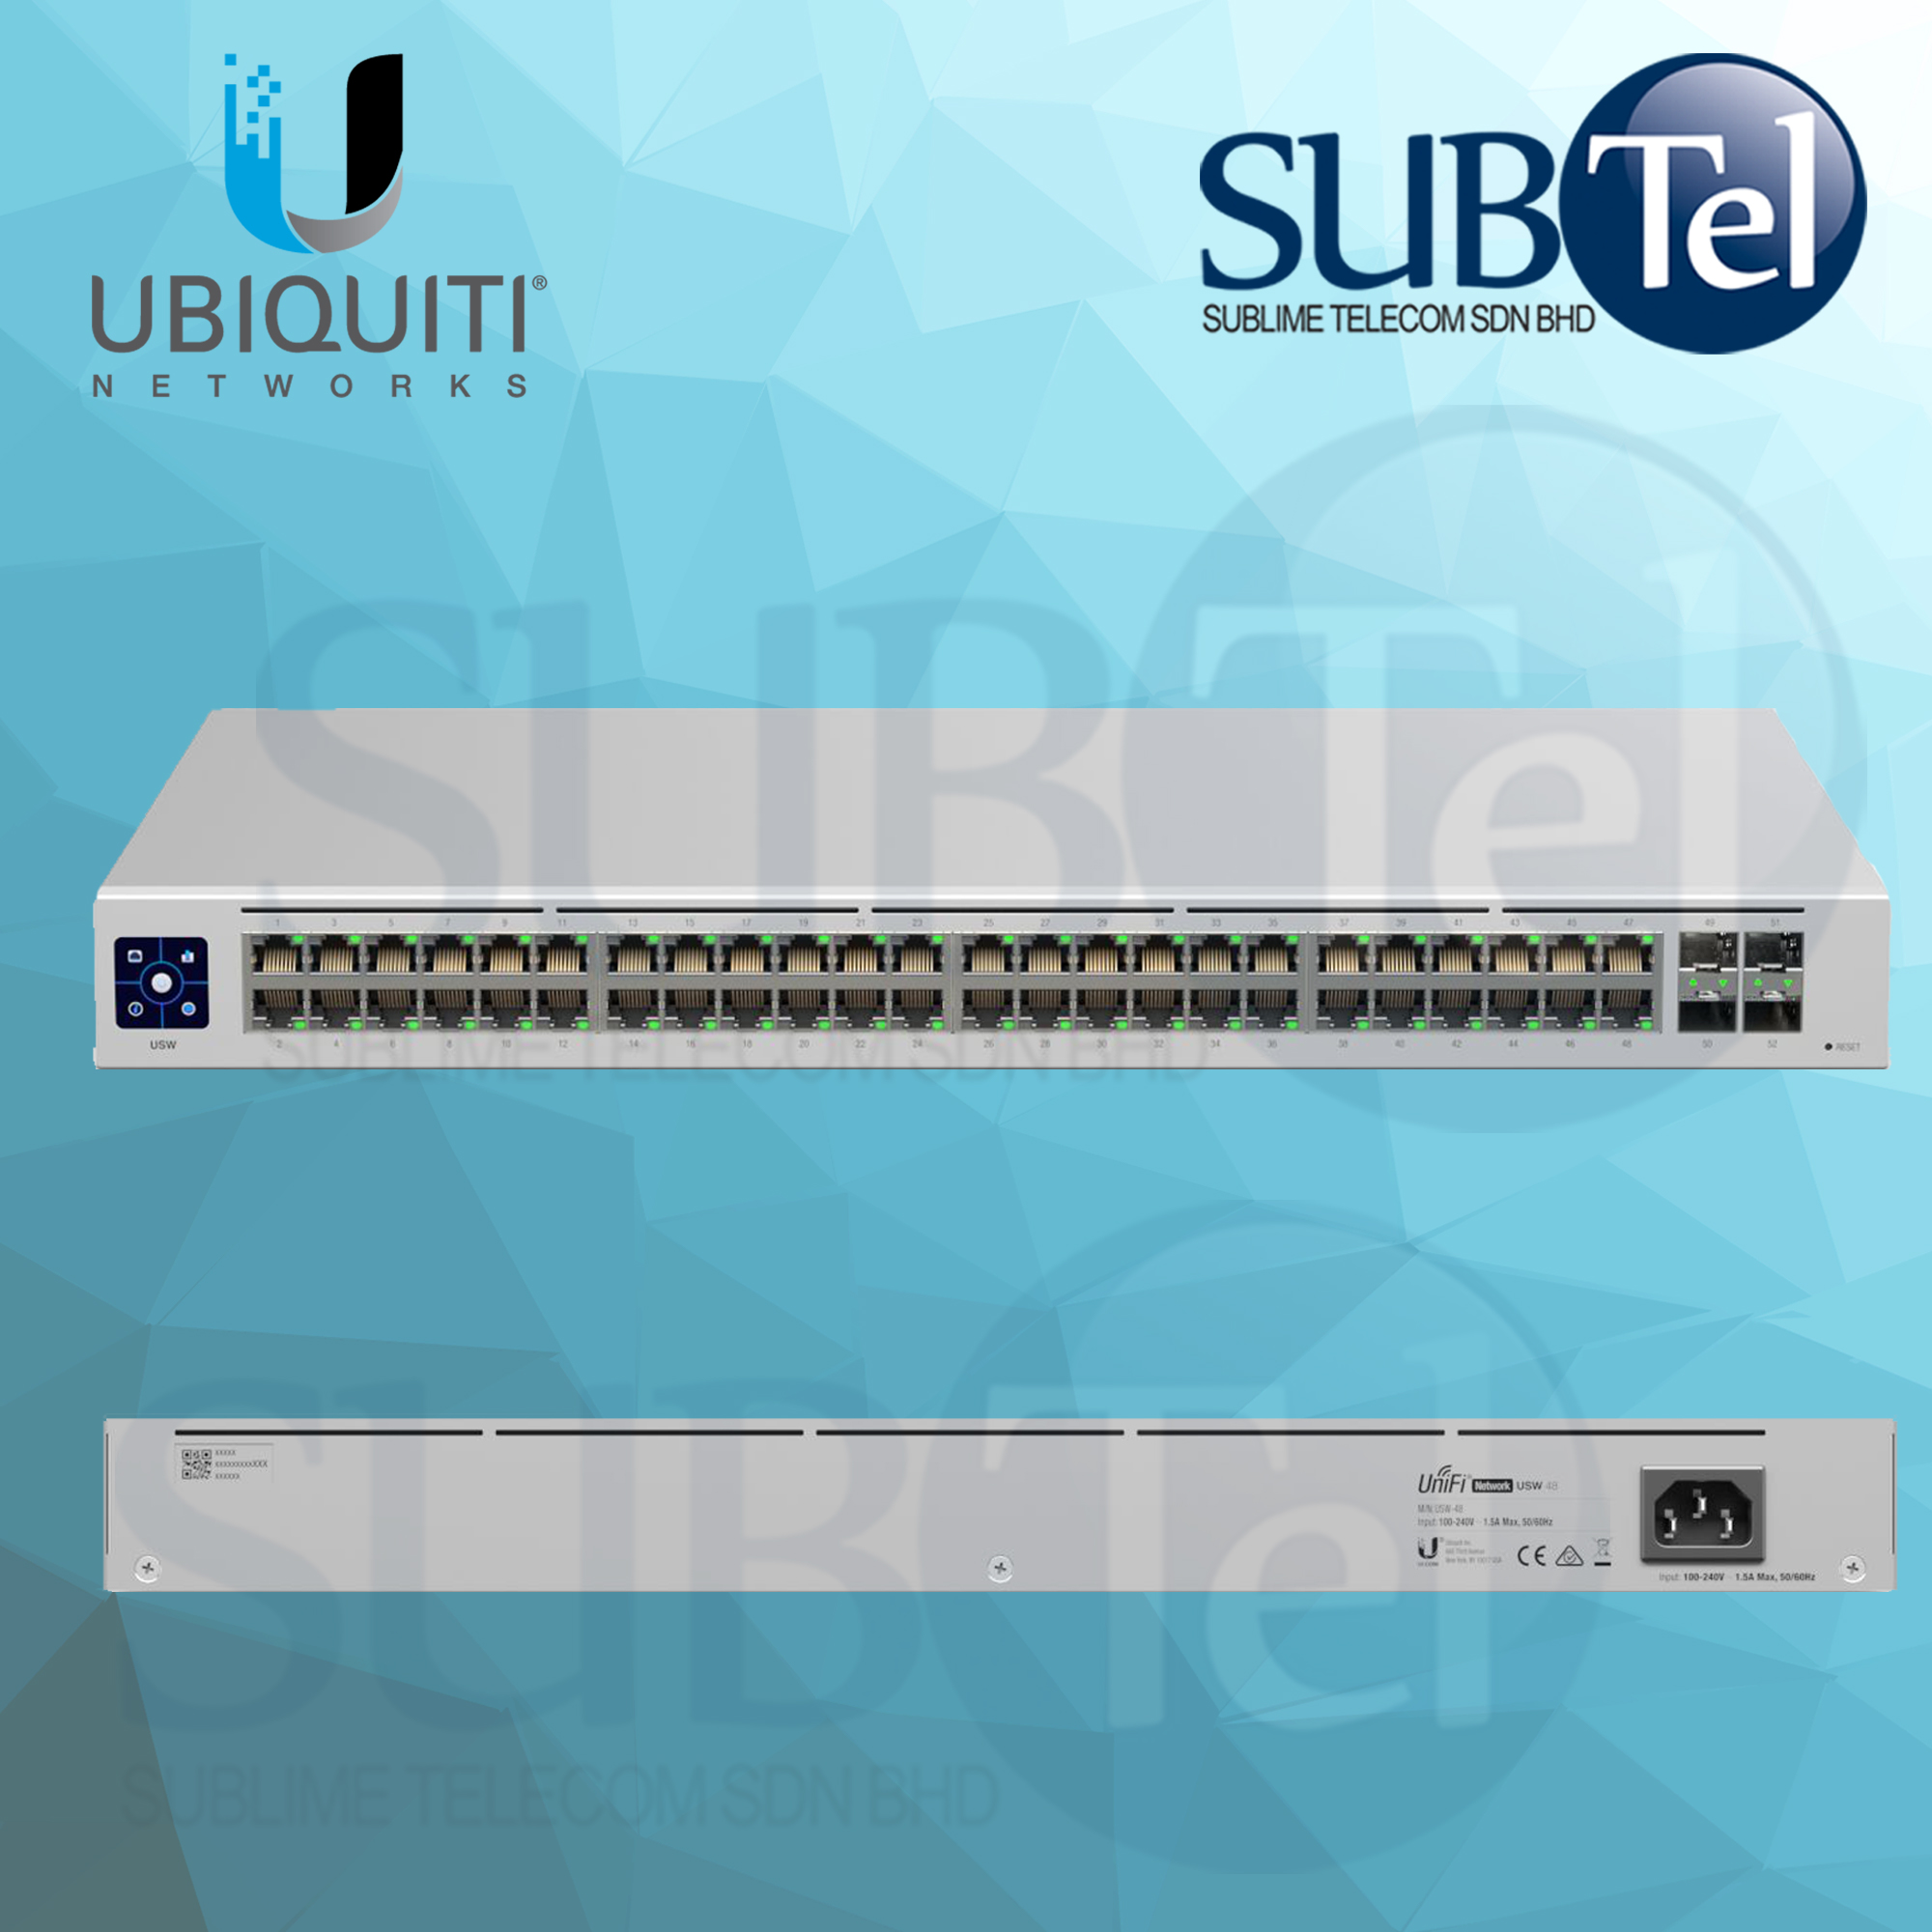 Ubiquiti USW-48 48-Port Managed Gigabit Switch with SFP Rackmount USW